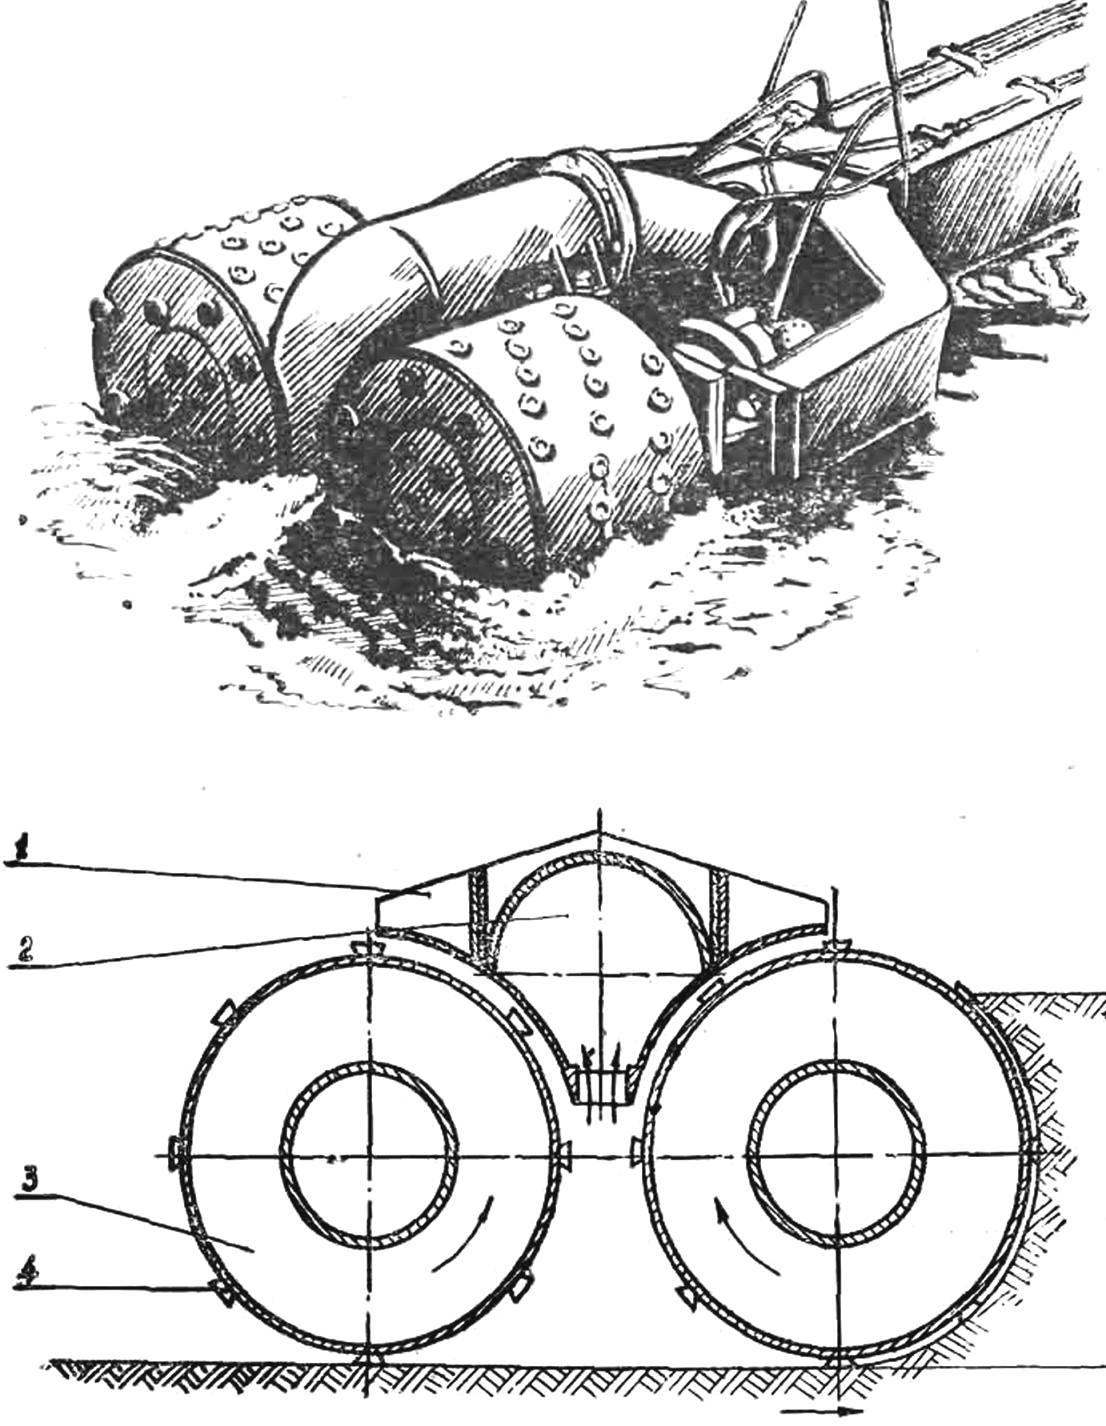 Fig. 2. Milling Ripper